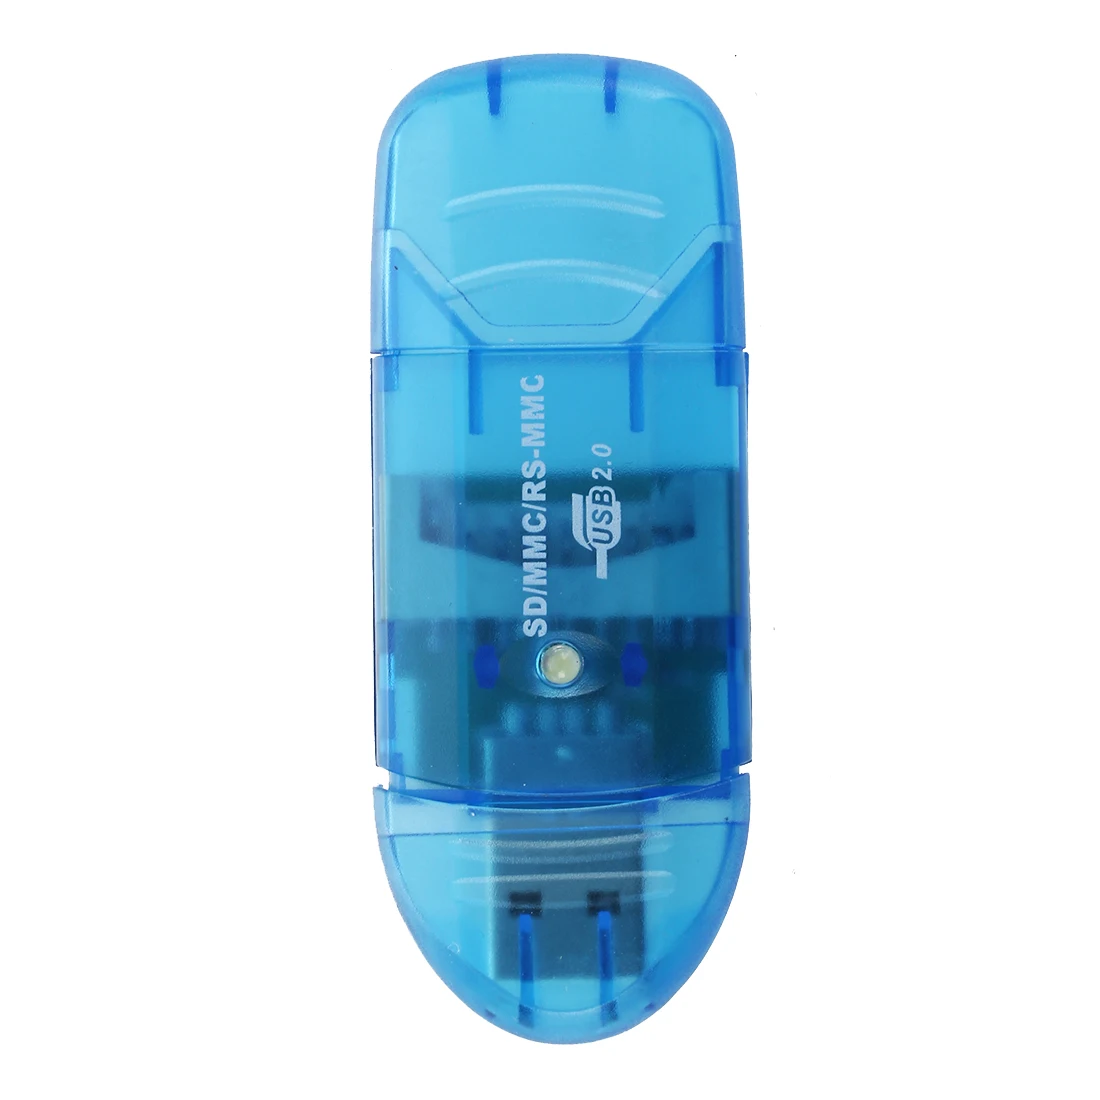 SD HC кардридер синий USB ключ формат